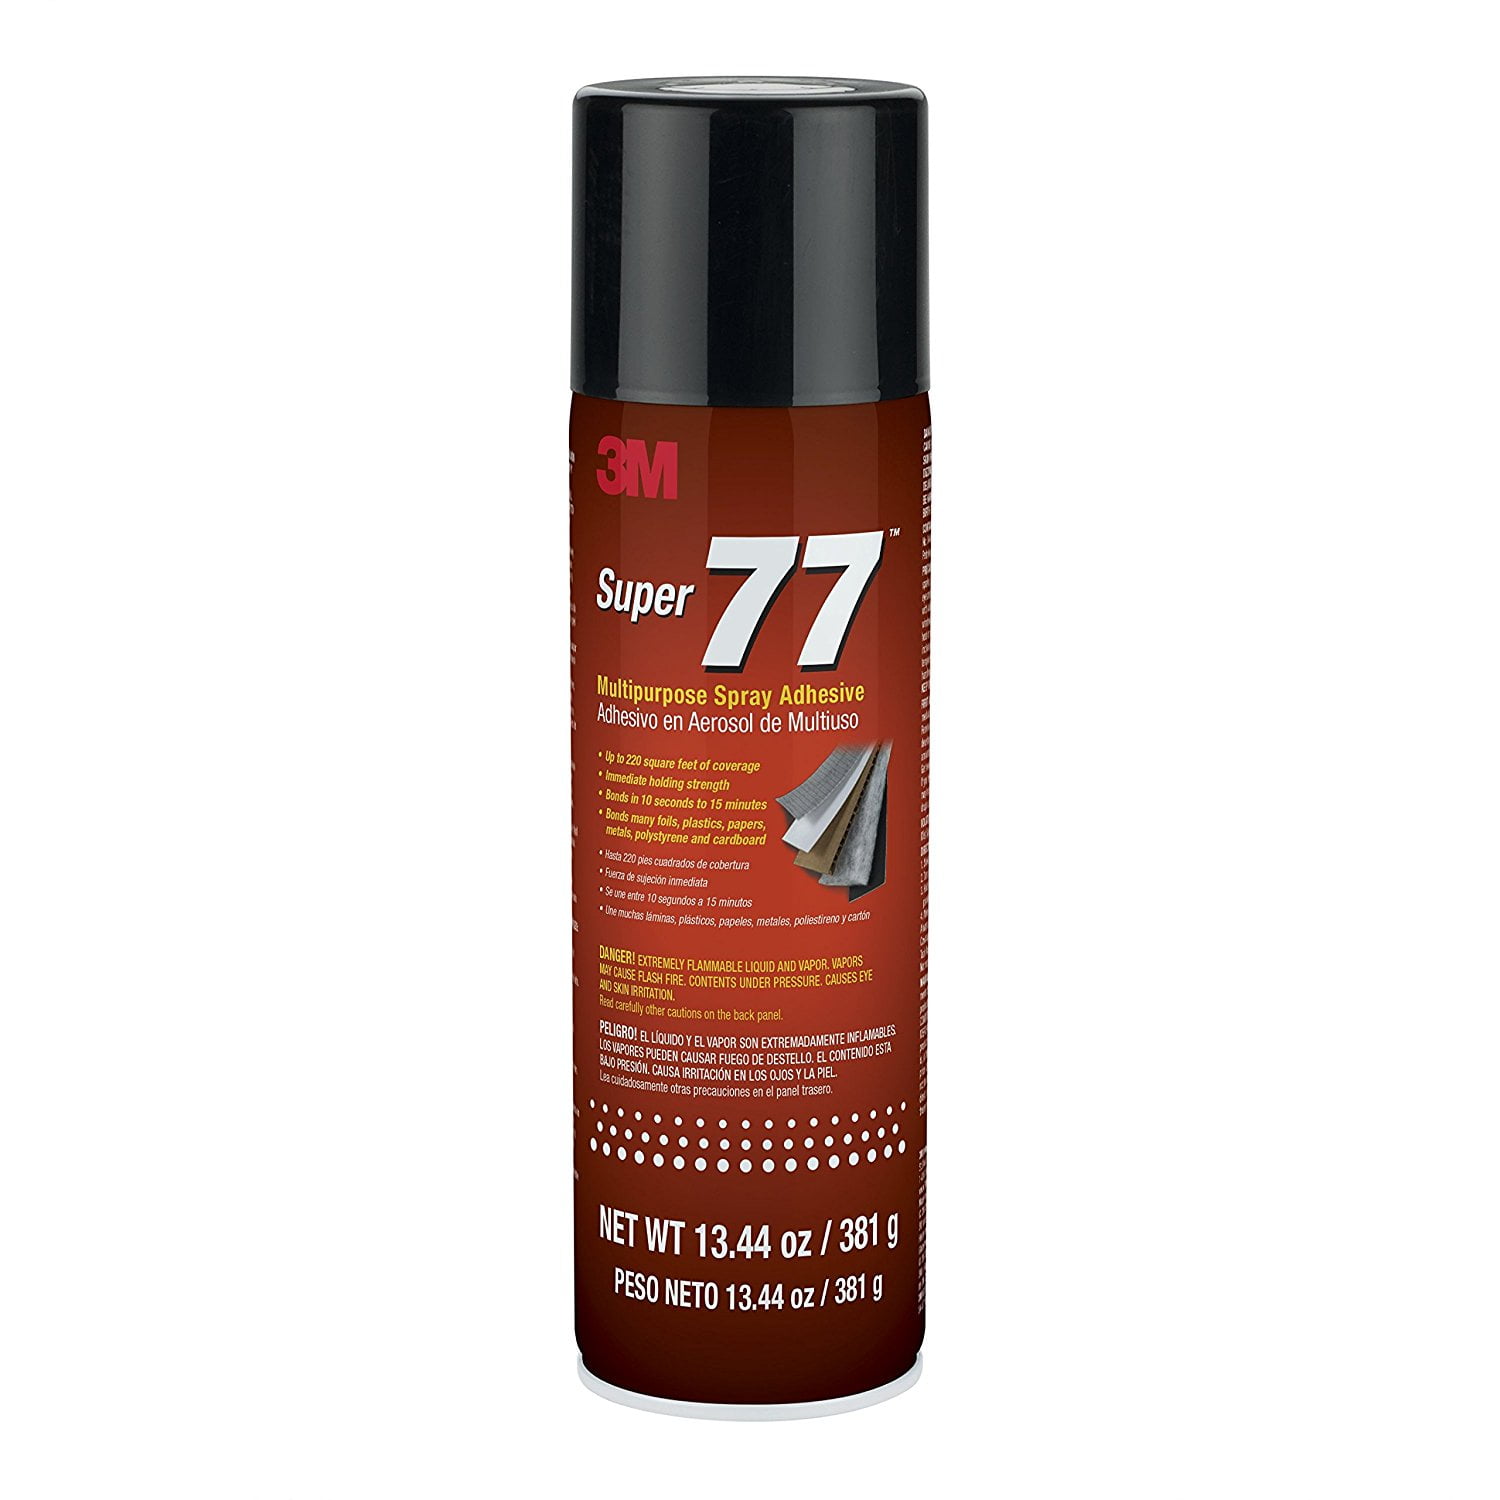 Scotch Super 77 Spray Adhesive @ FindTape